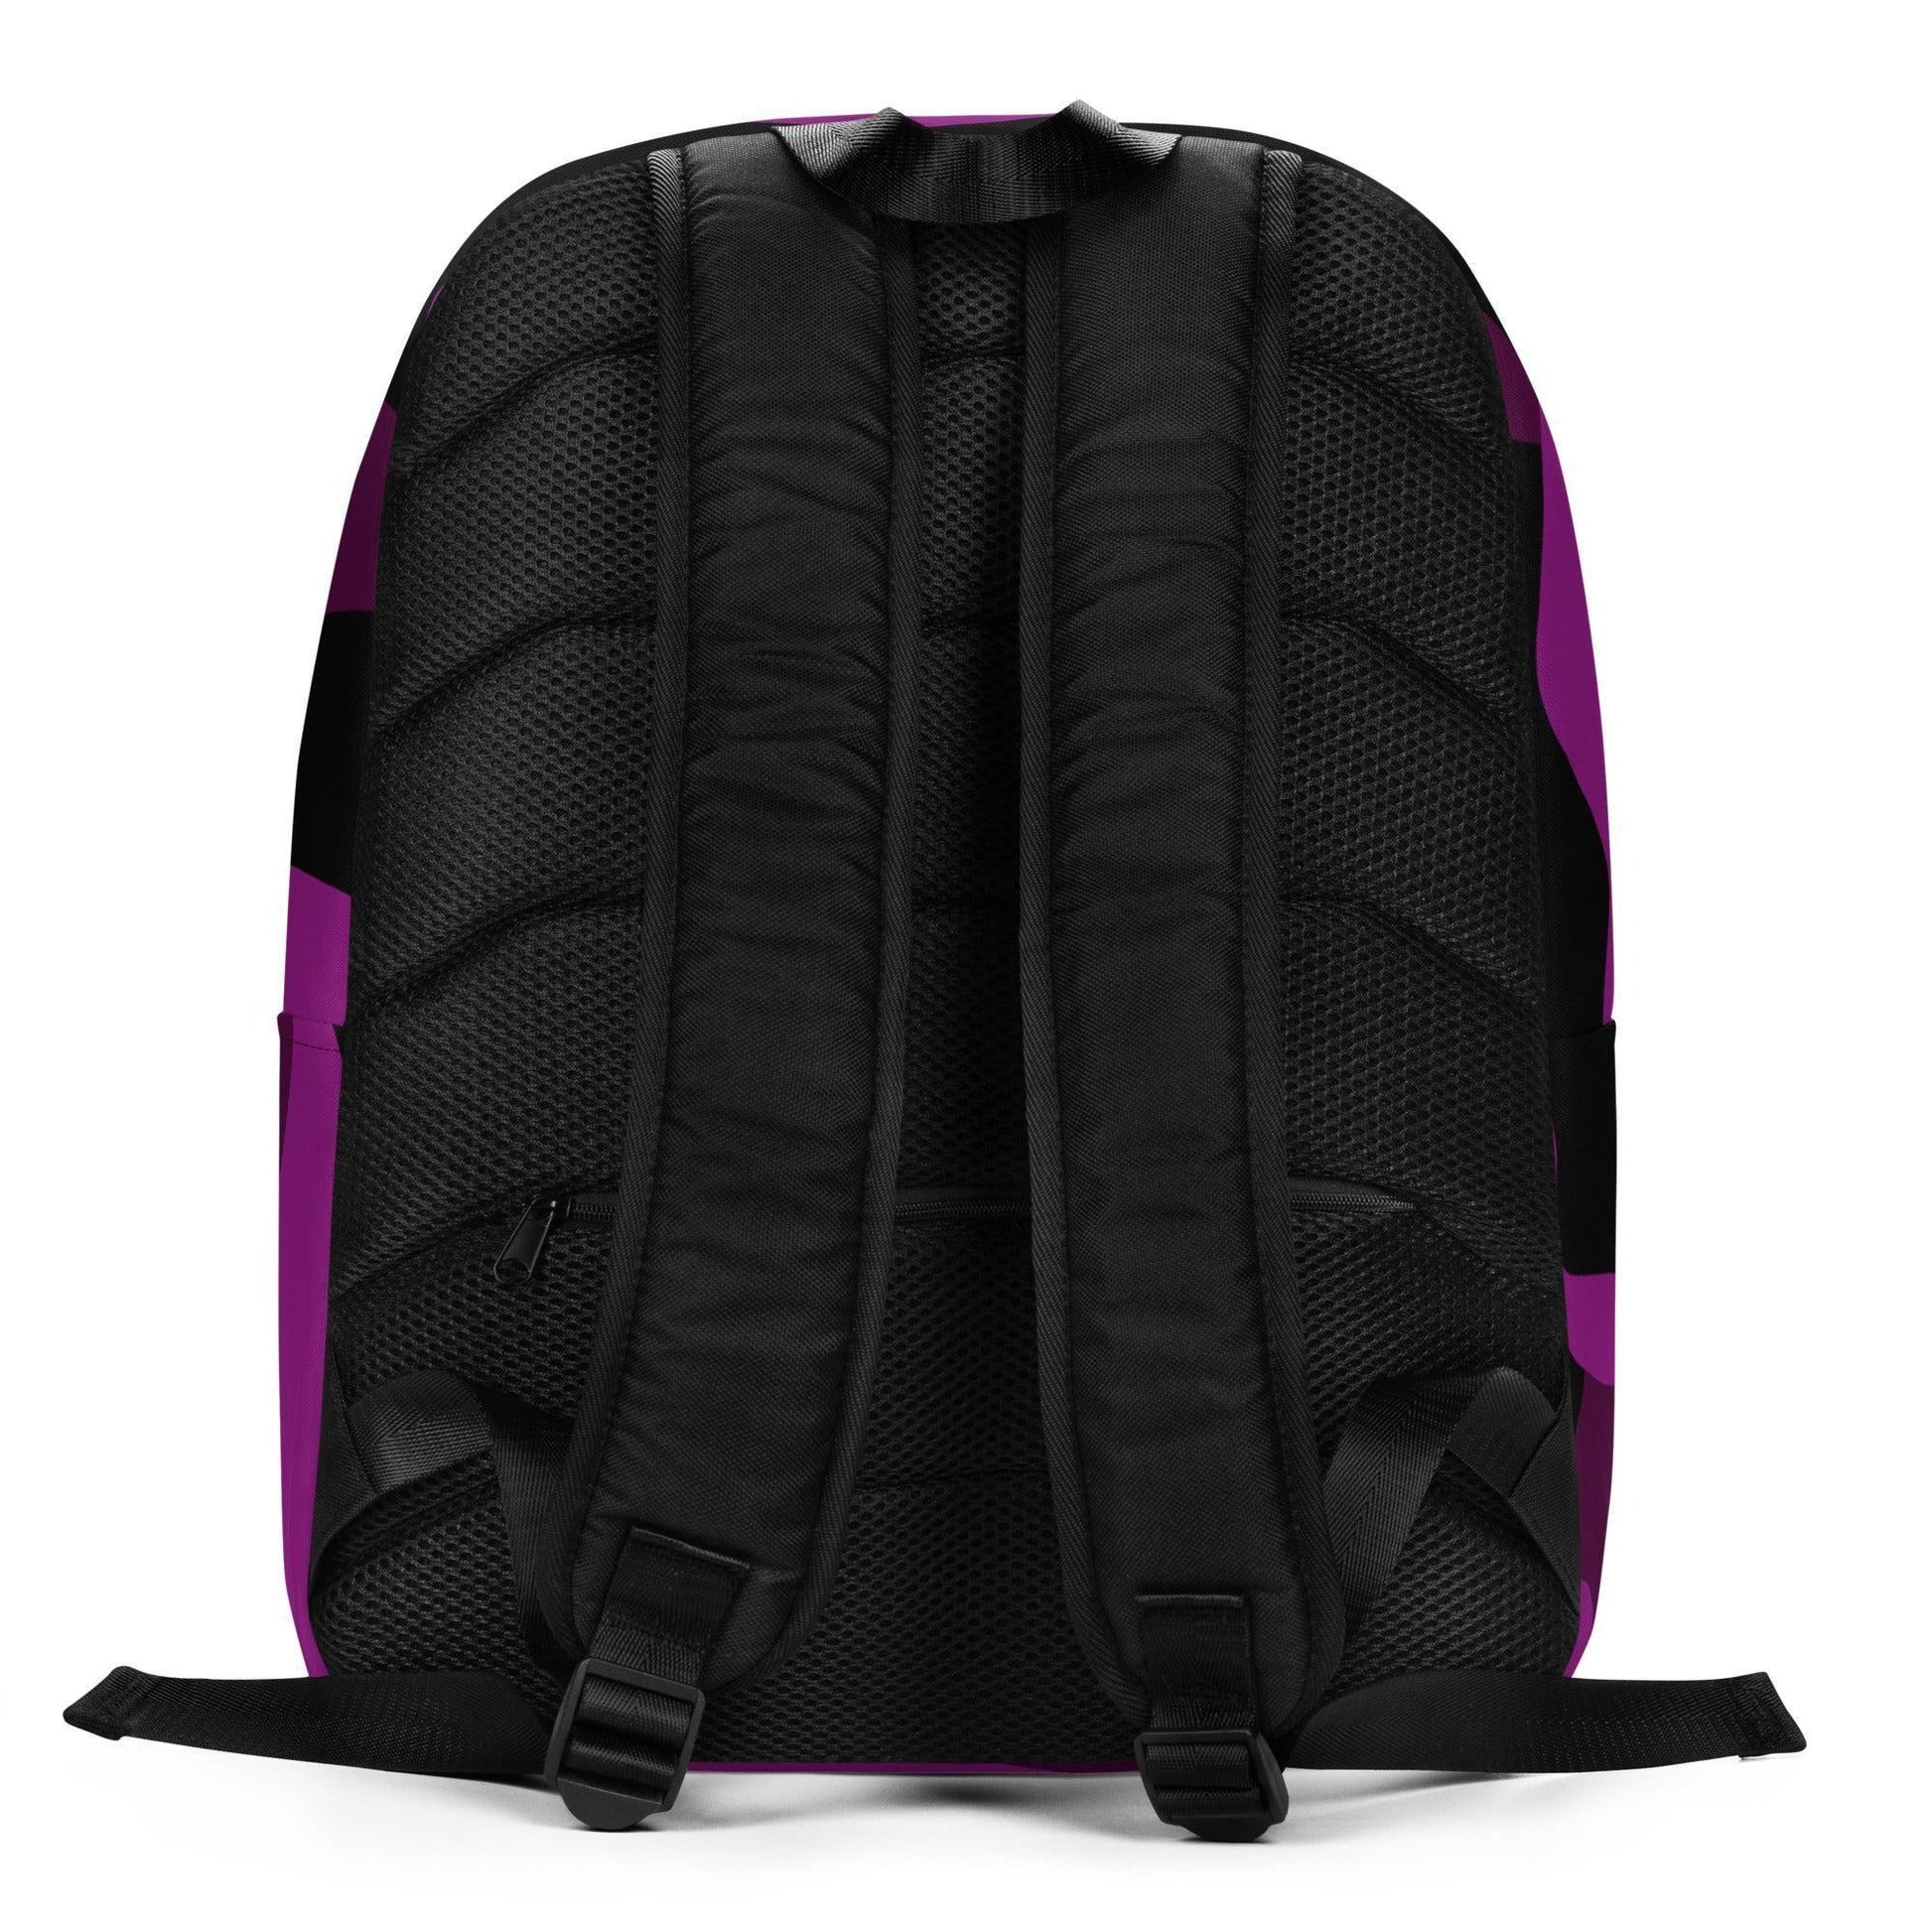 Black Violett Camouflage Rucksack -- Black Violett Camouflage Rucksack - undefined Rucksack | JLR Design